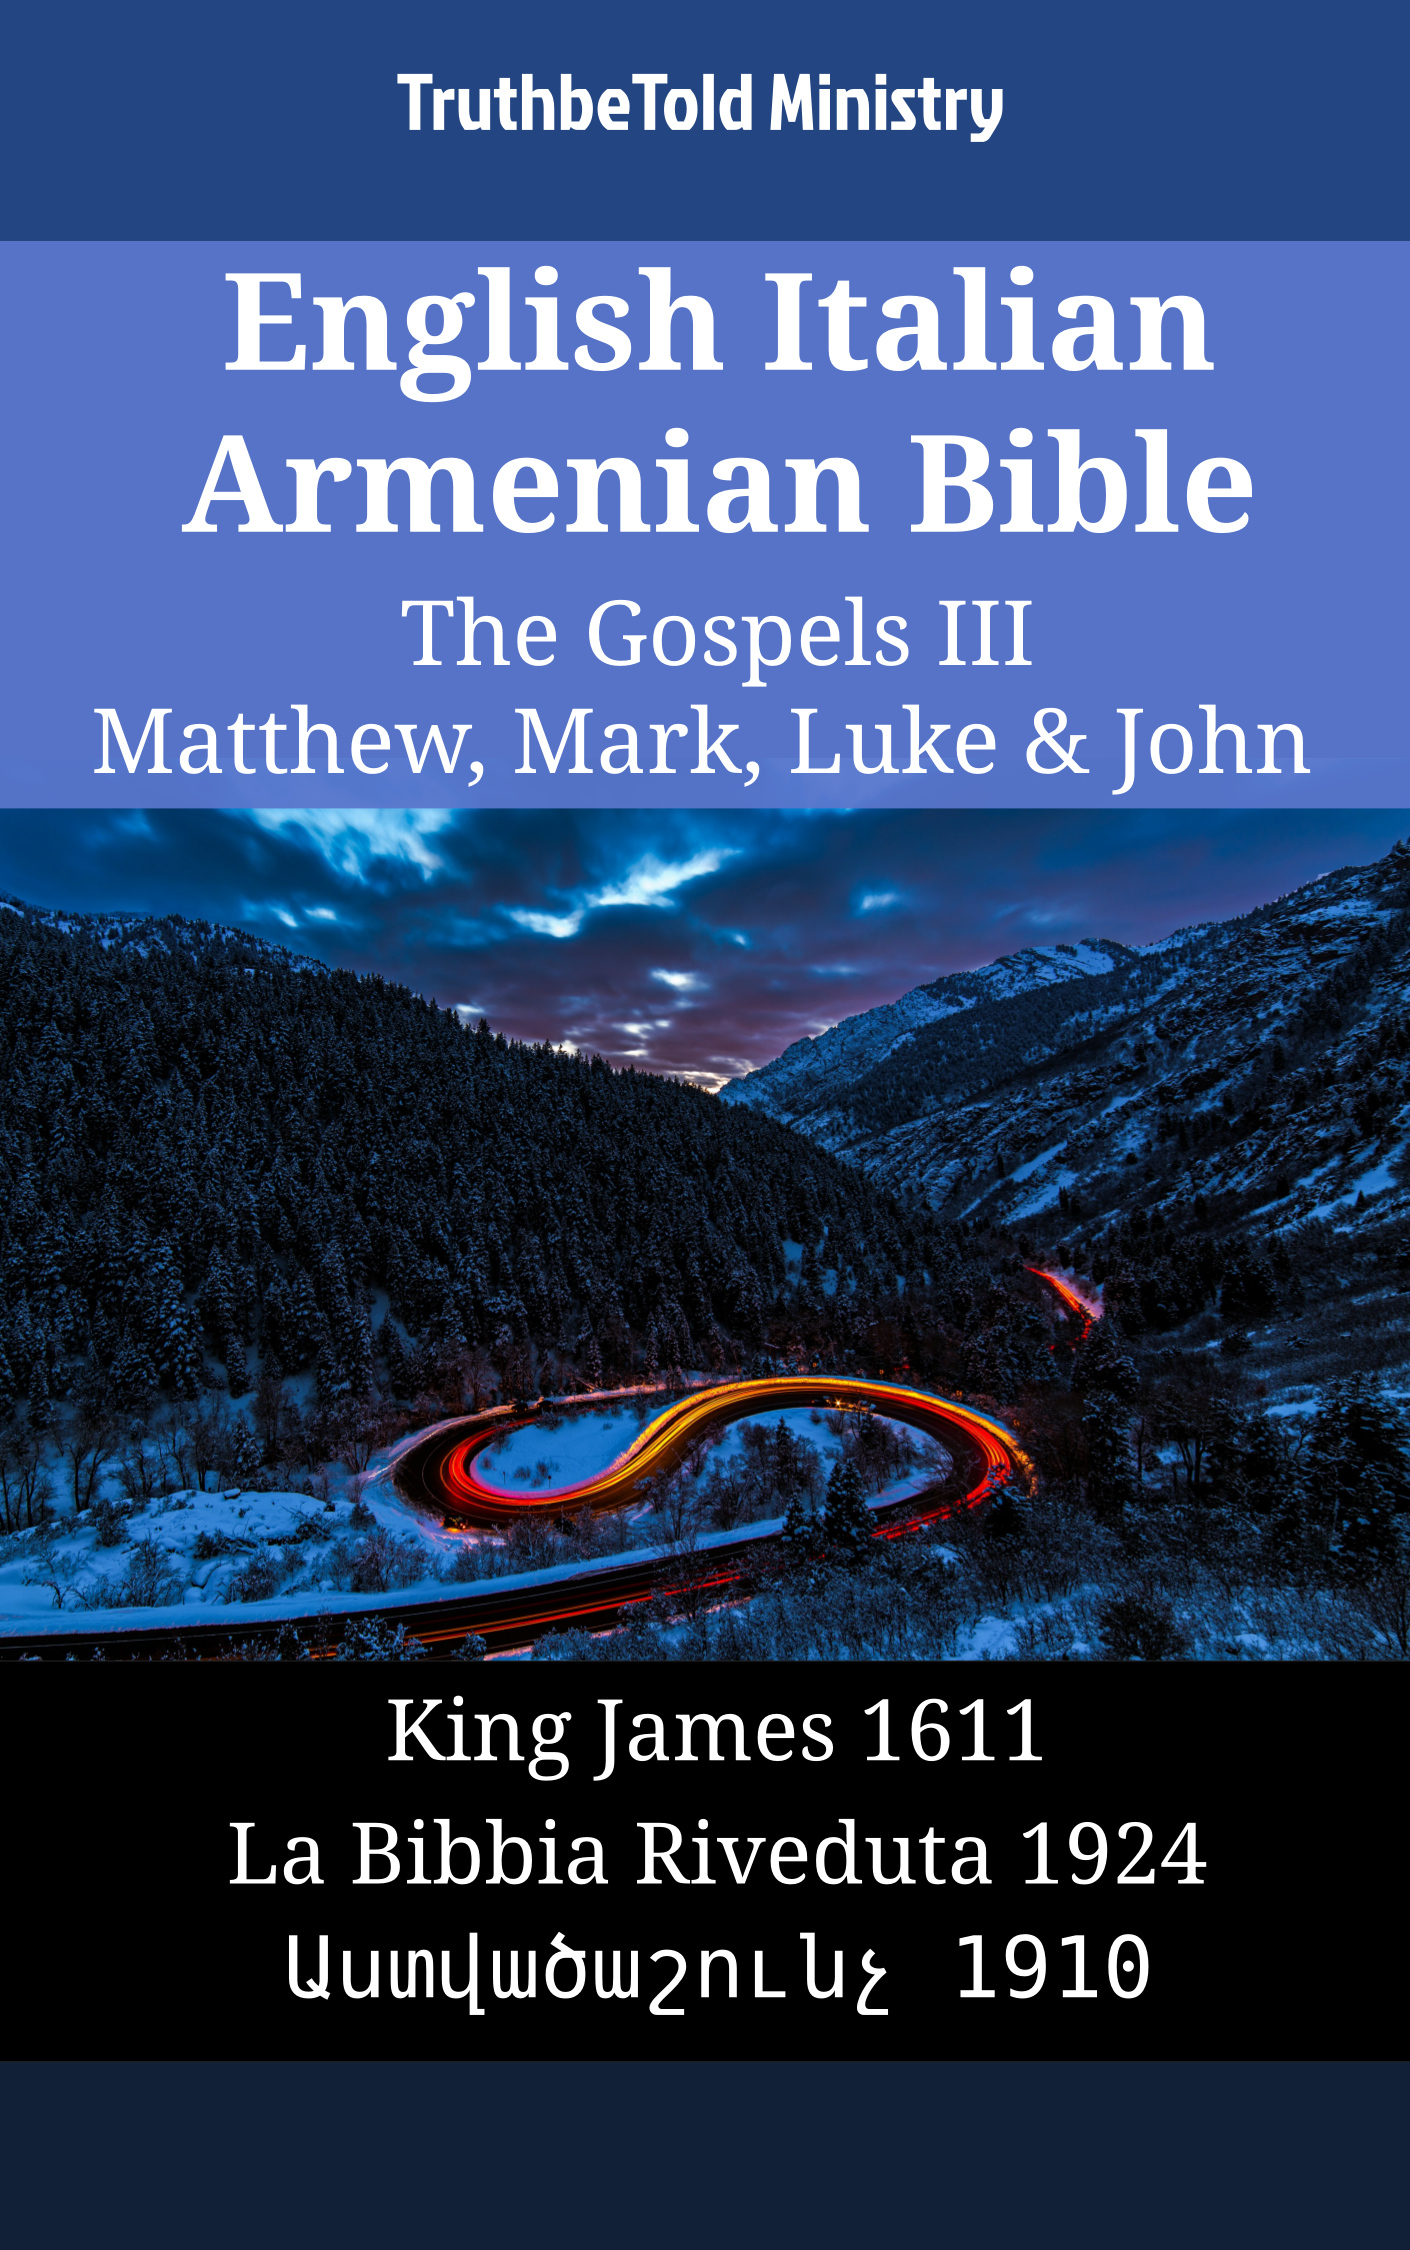 English Italian Armenian Bible - The Gospels III - Matthew, Mark, Luke & John